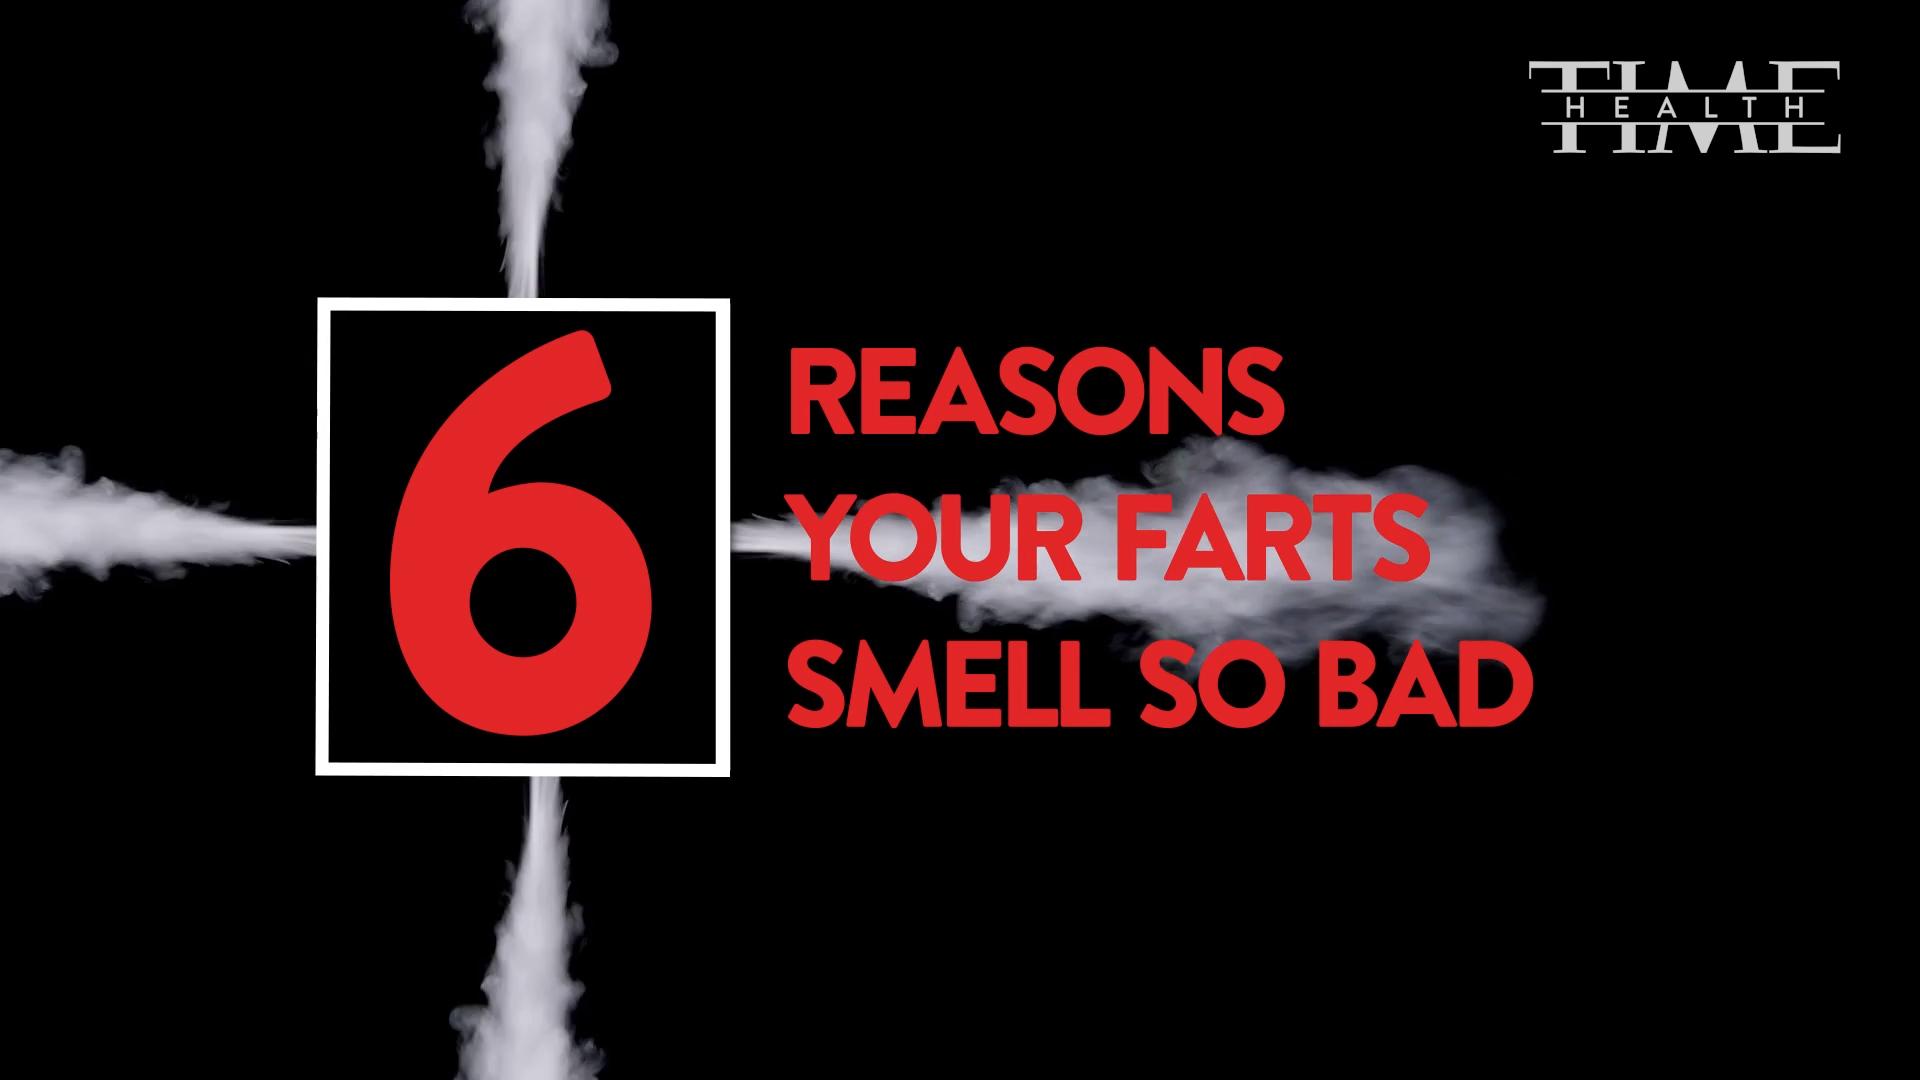 Smelling natural farts turns